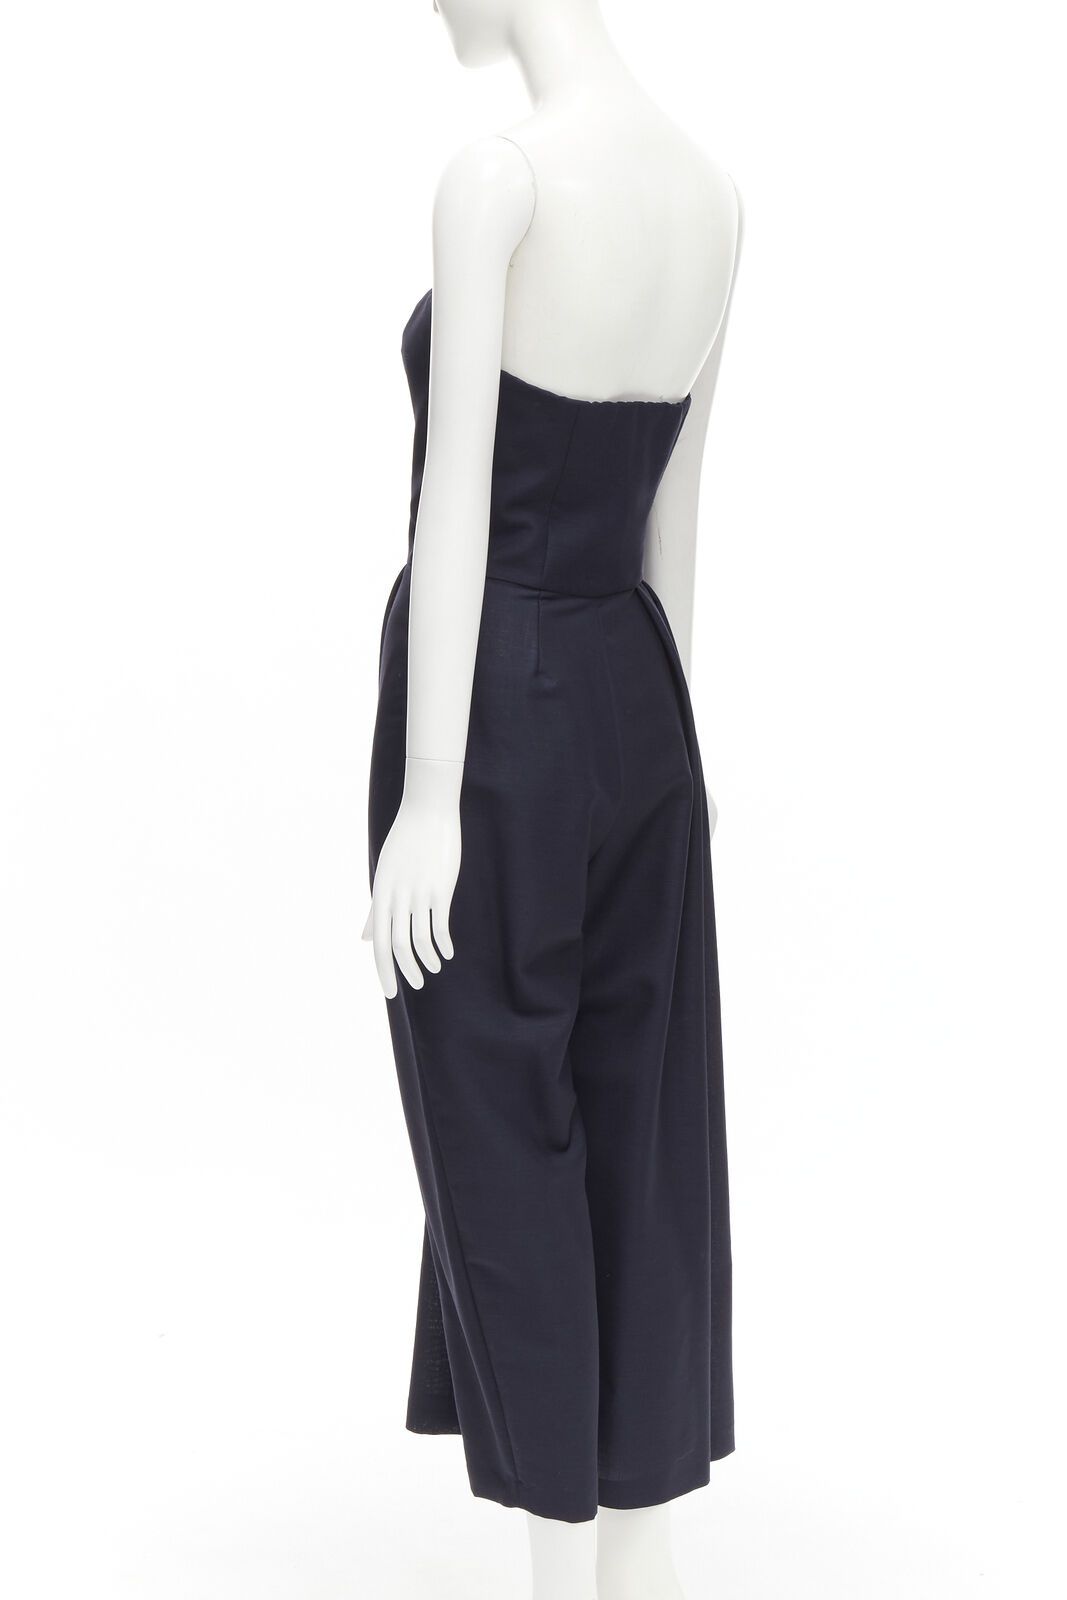 Dior CHRISTIAN DIOR Raf Simons navy asymmetrical leg strapless corset jumpsuit FR36 S Size 27" / US 4 / IT 40 - 6 Thumbnail